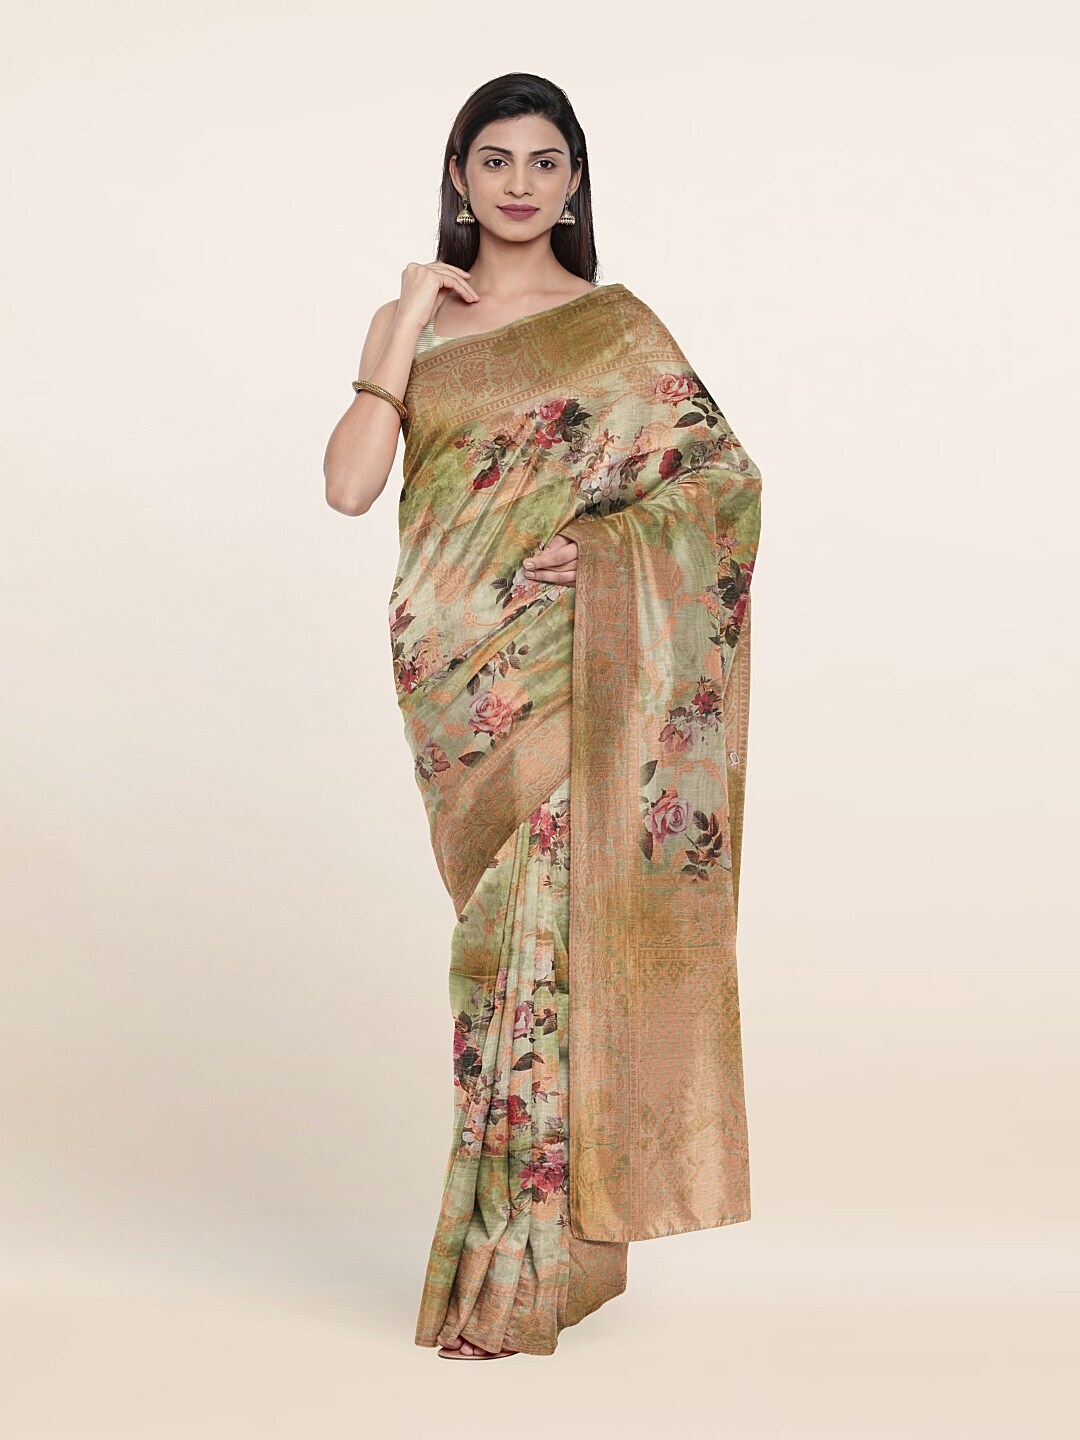 Pothys Green & Peach-Coloured Floral Art Silk Saree Price in India